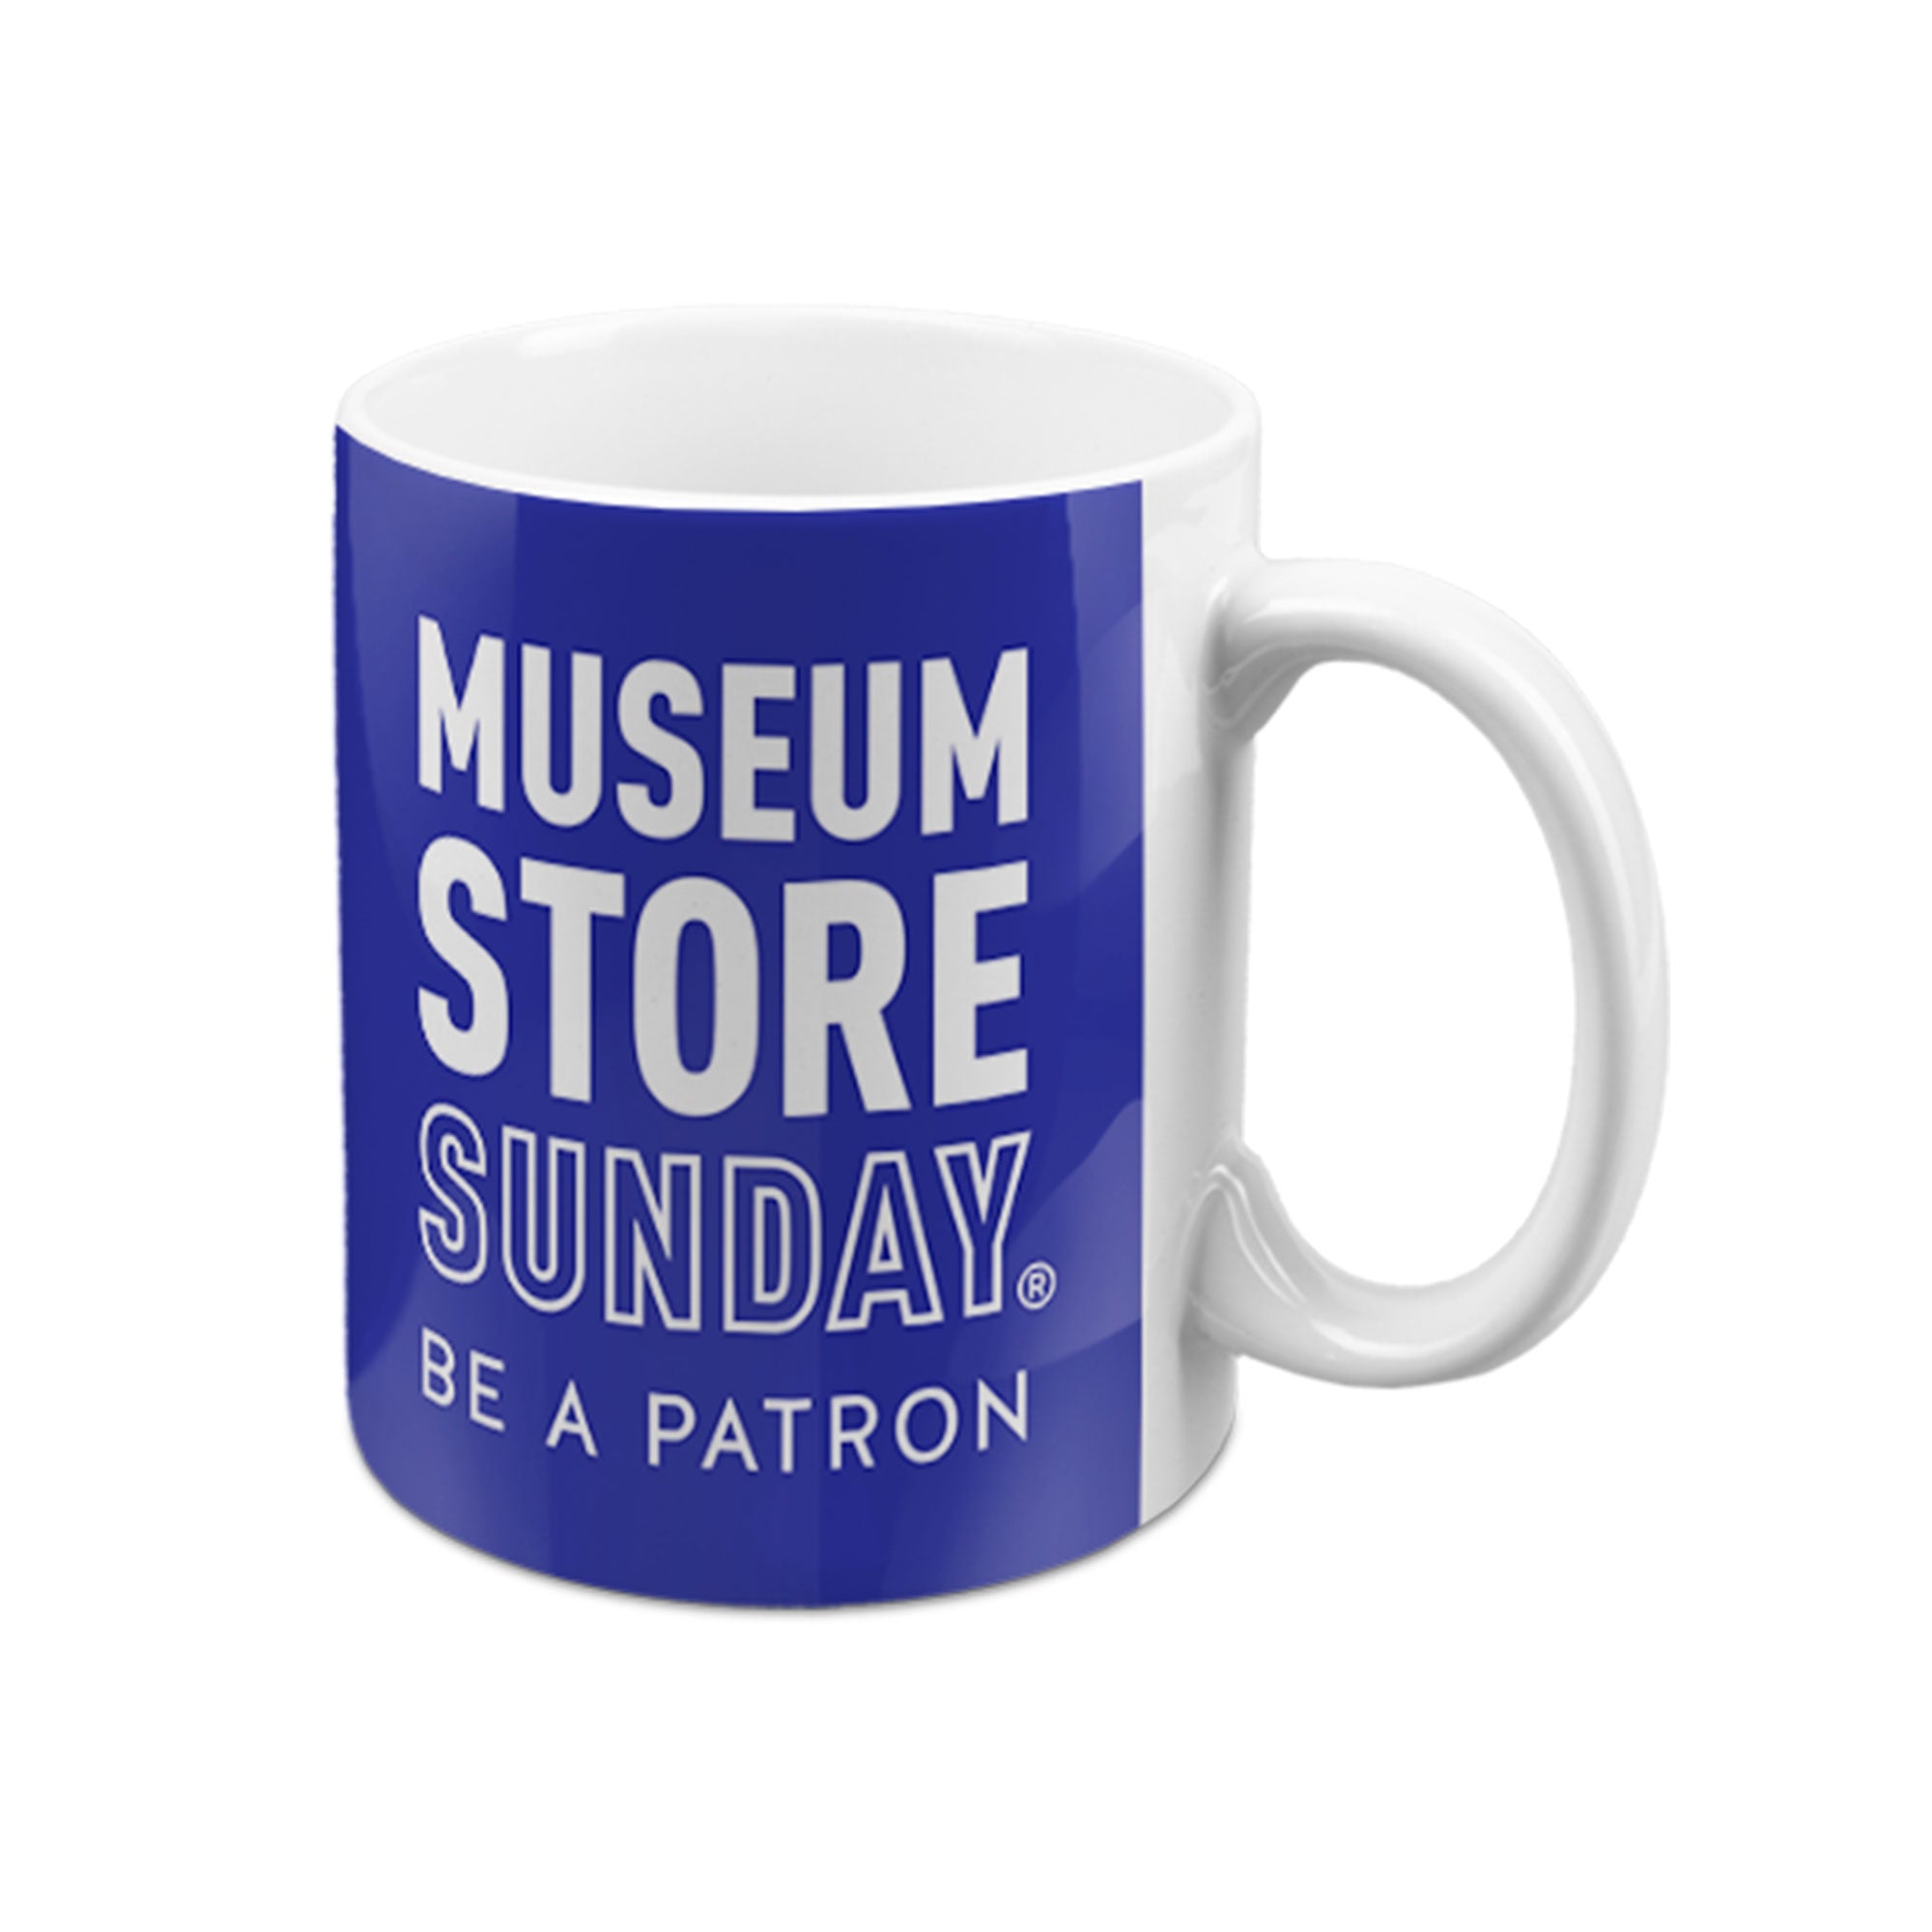 Museum Store Sunday Mug